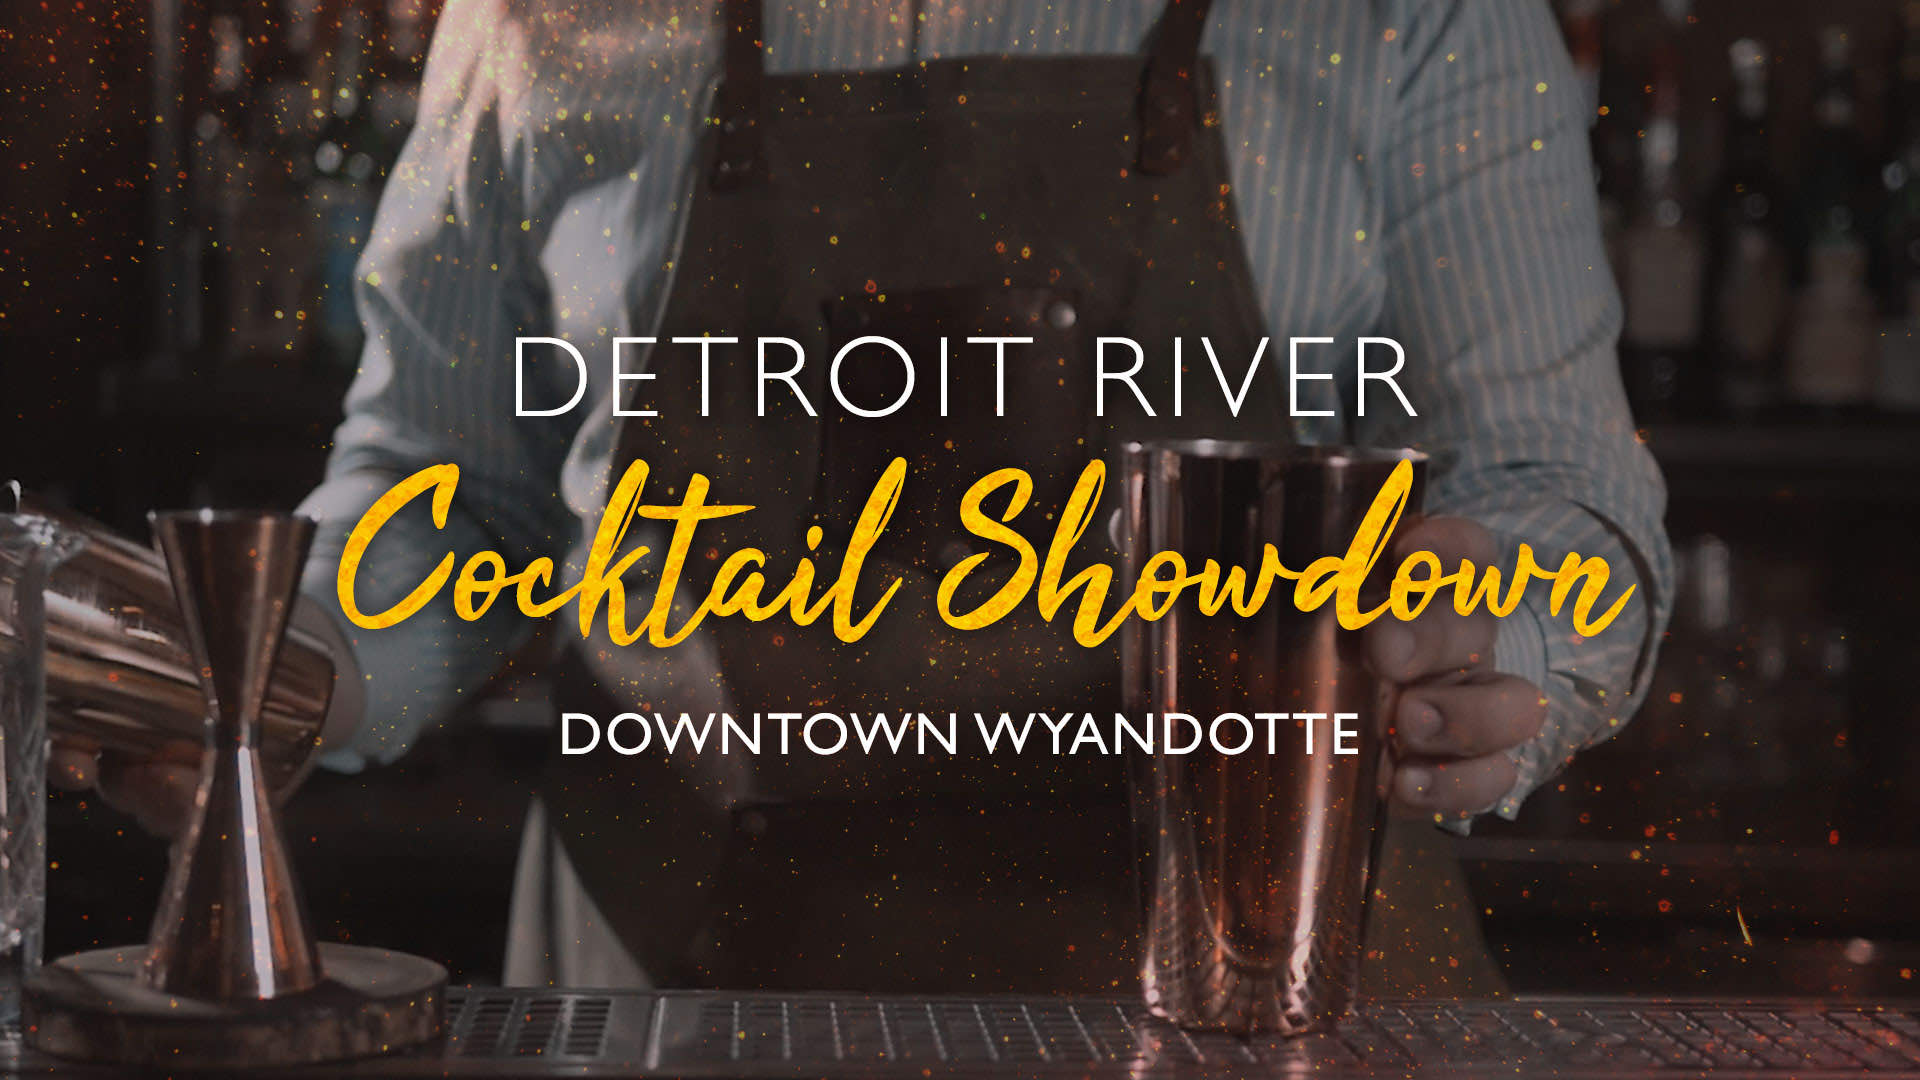 Detroit River Cocktail Showdown in Downtown Wyandotte